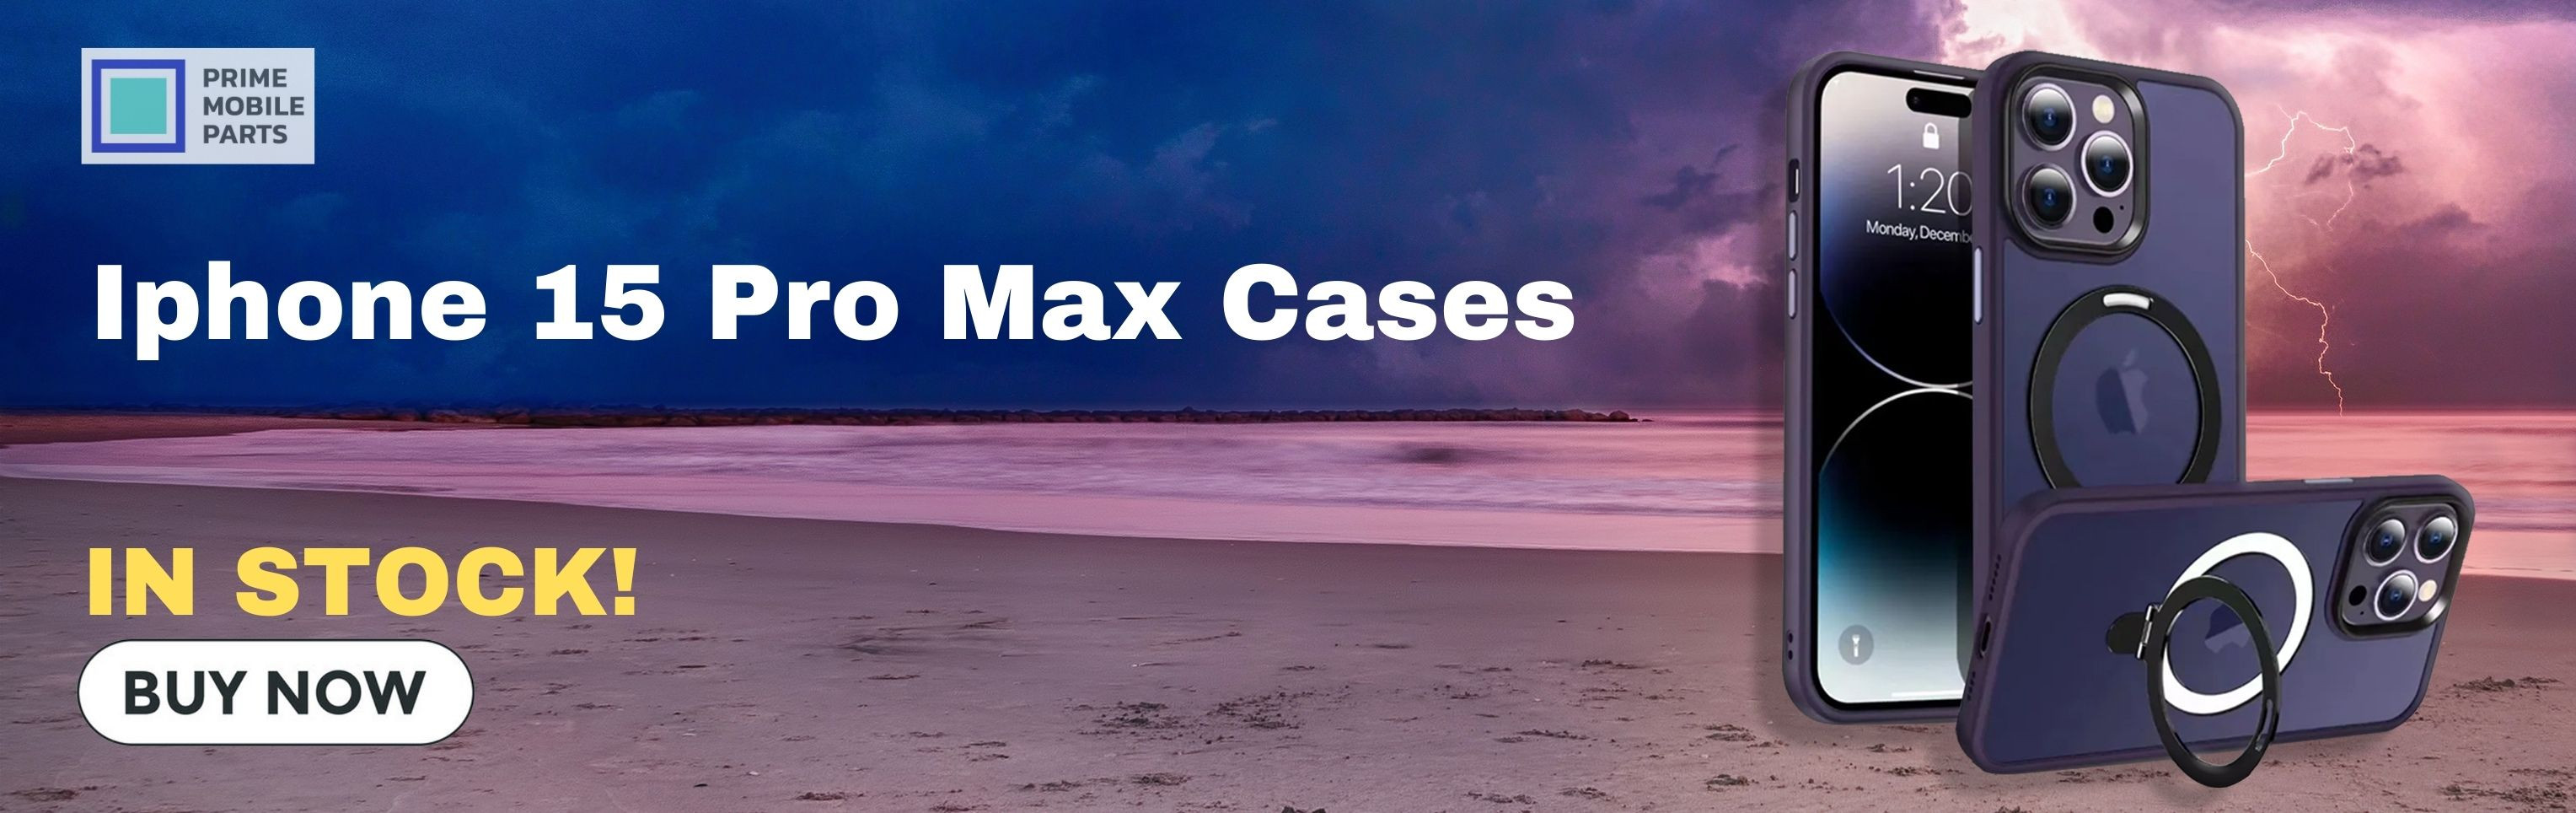 iPhone 15 pro max series cases